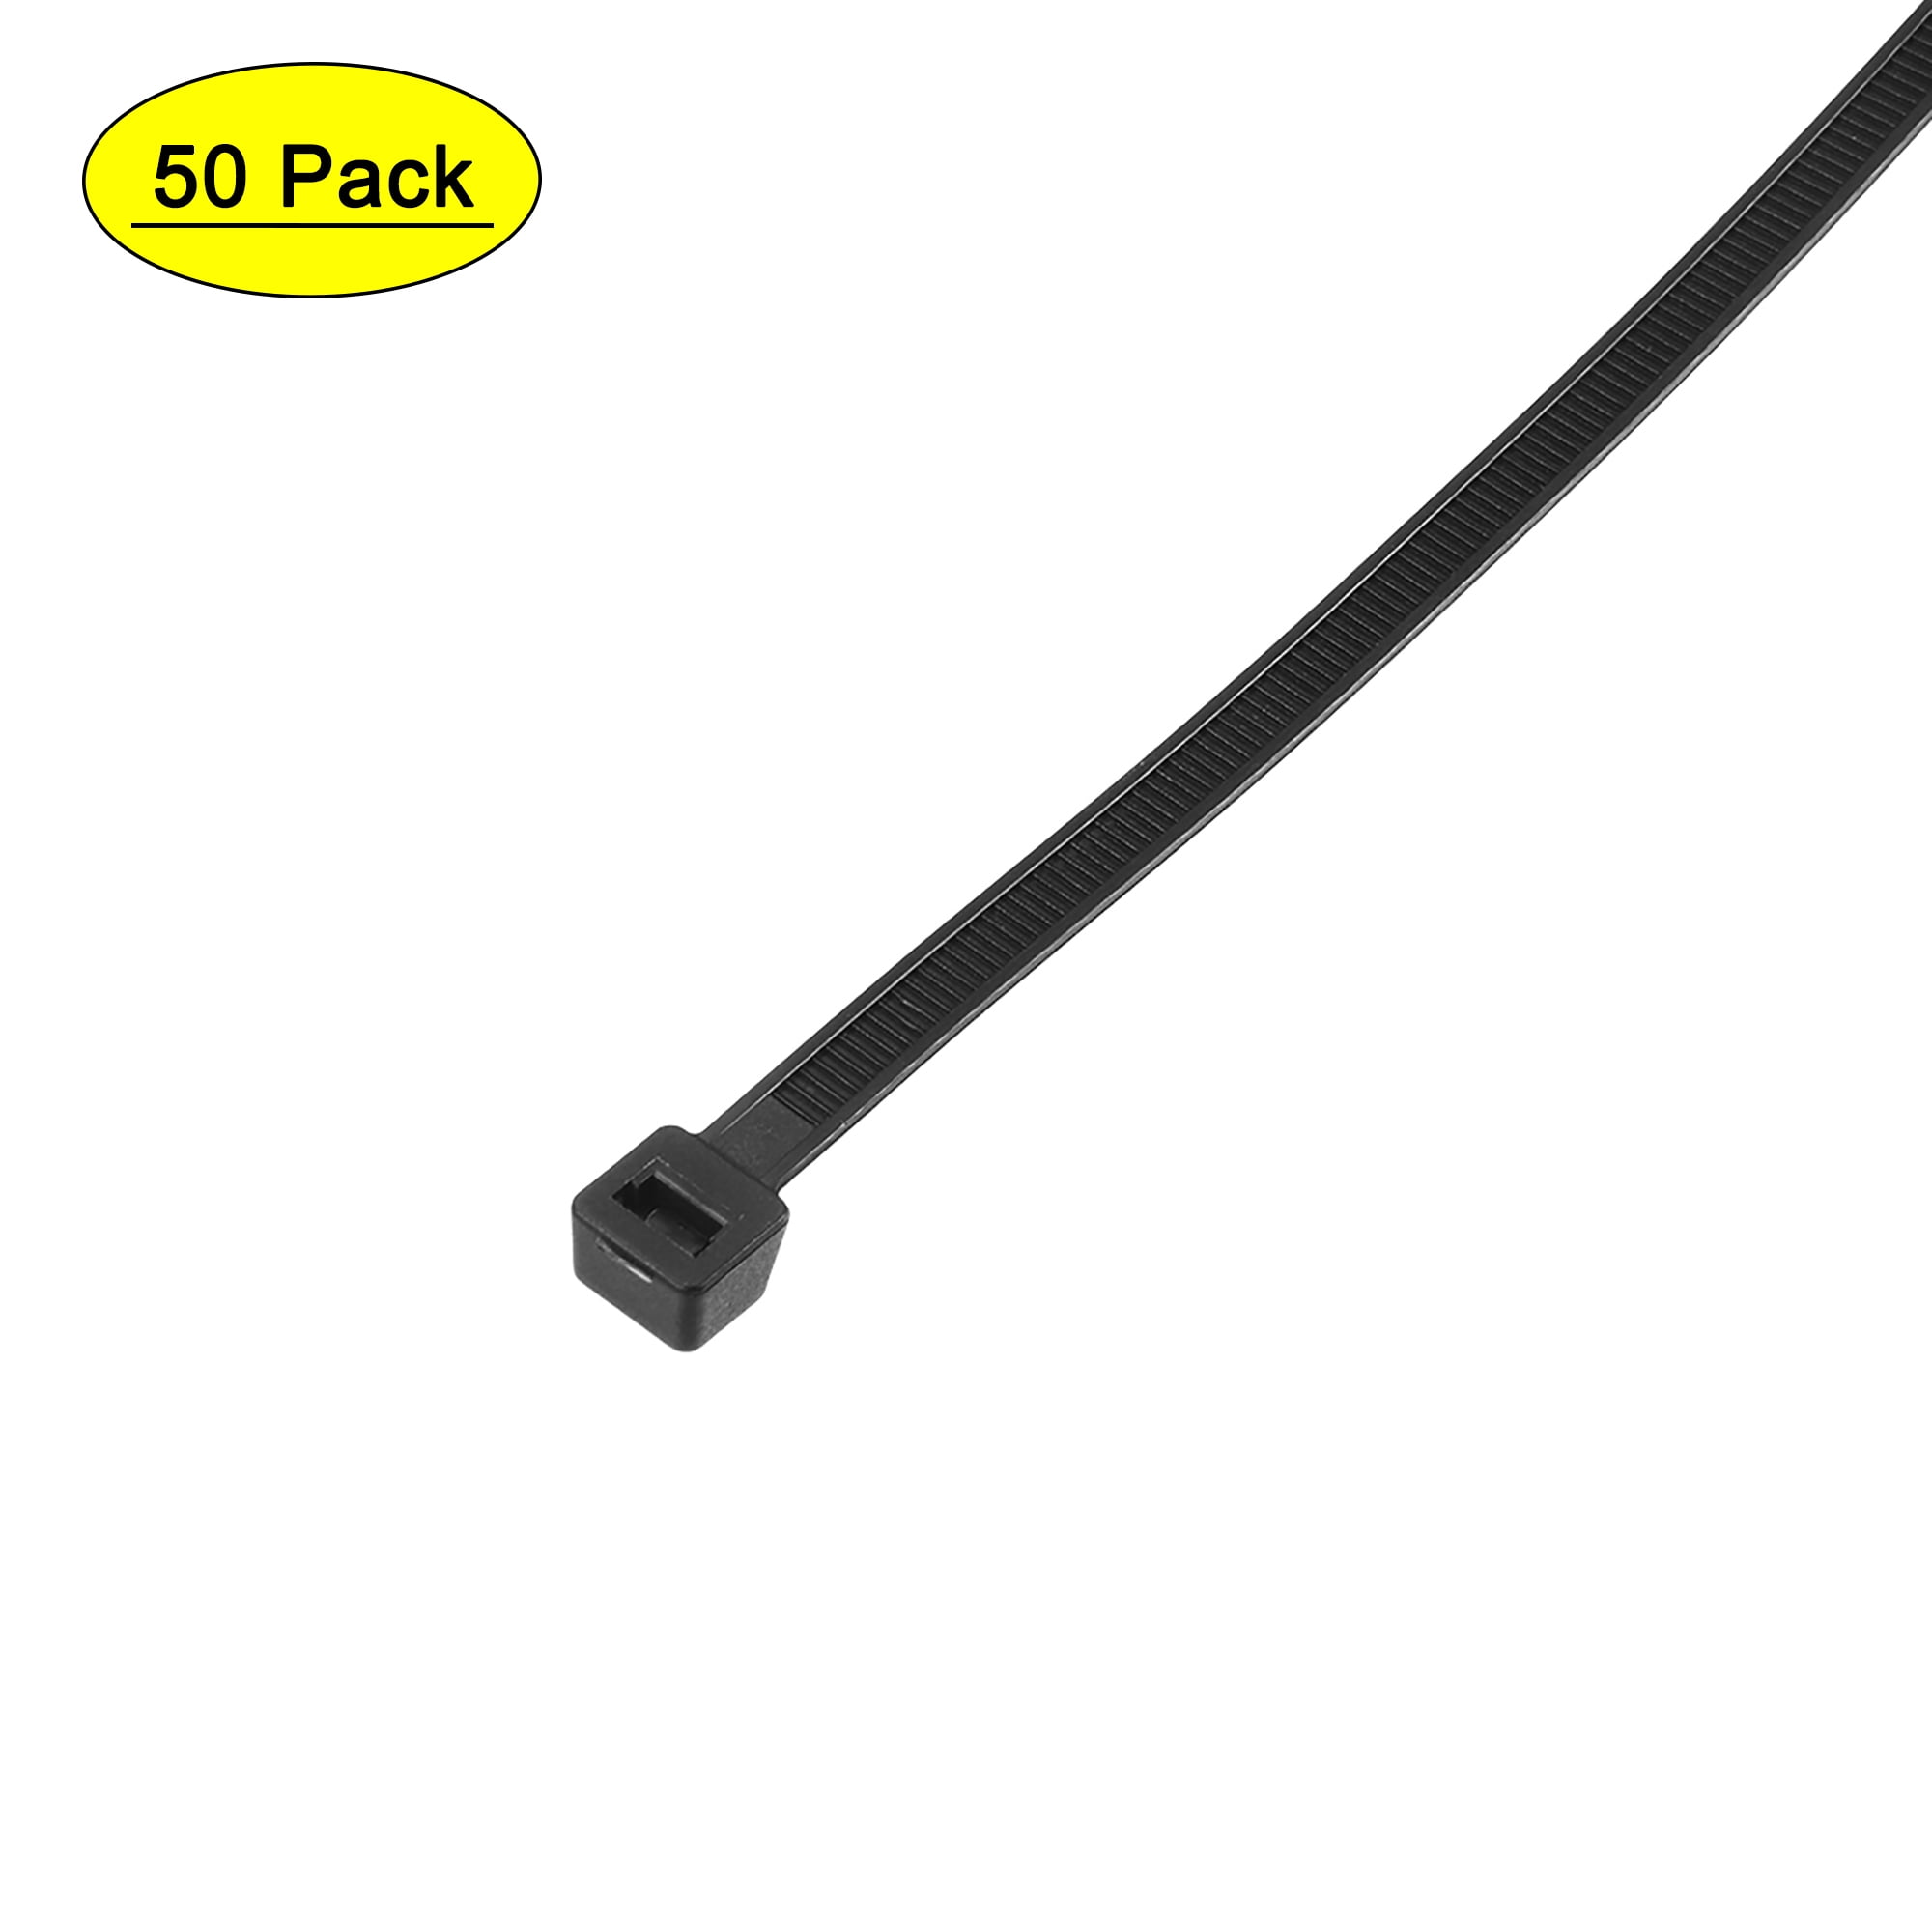 Nylon Cable Ties Multi Size Colour Quantity Strong Plastic Zip Tie Wrap Pack 